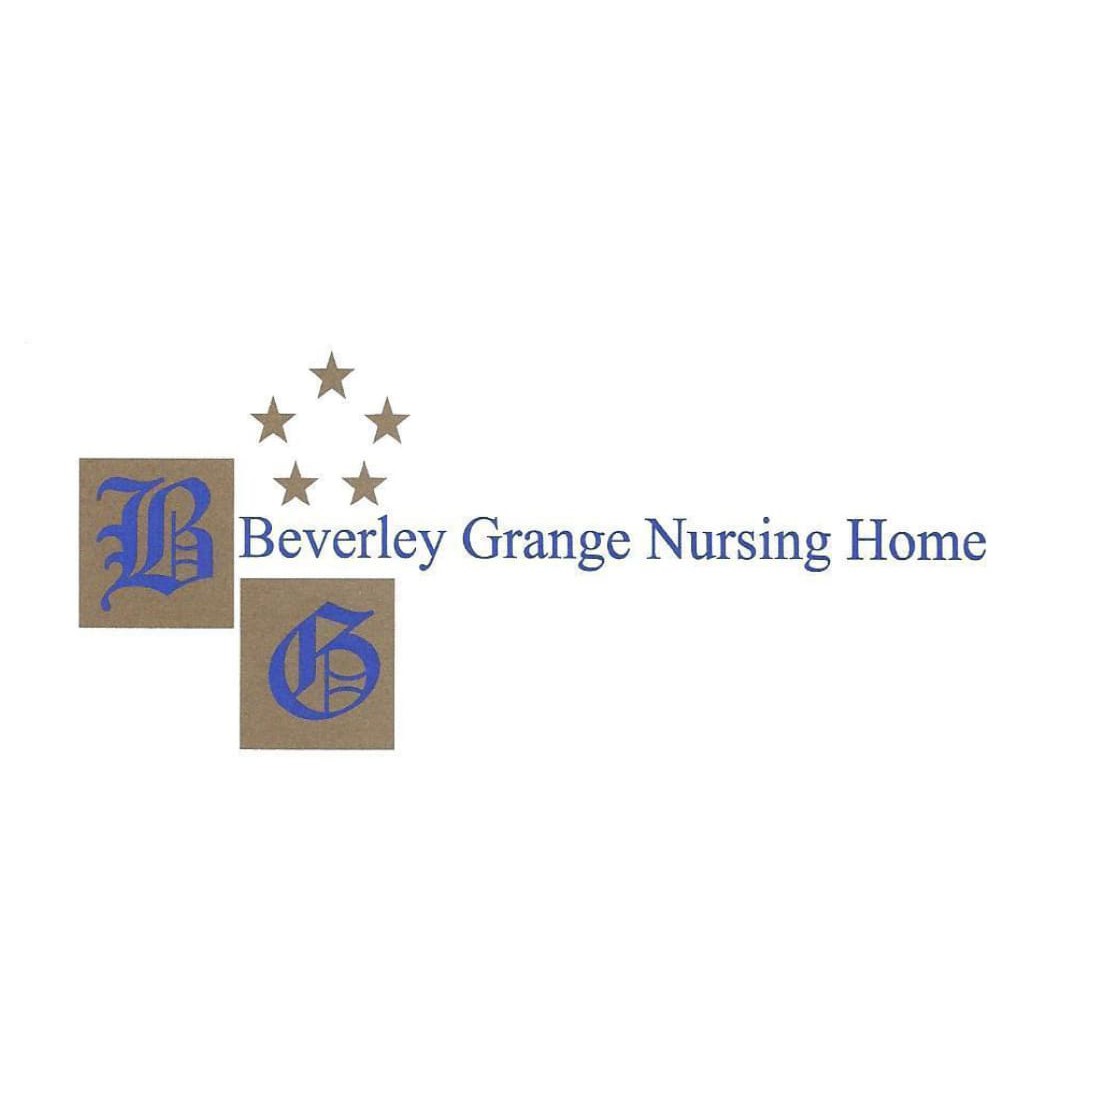 Beverley Grange Nursing Home - Beverley, East Riding of Yorkshire HU17 9GQ - 01482 679955 | ShowMeLocal.com